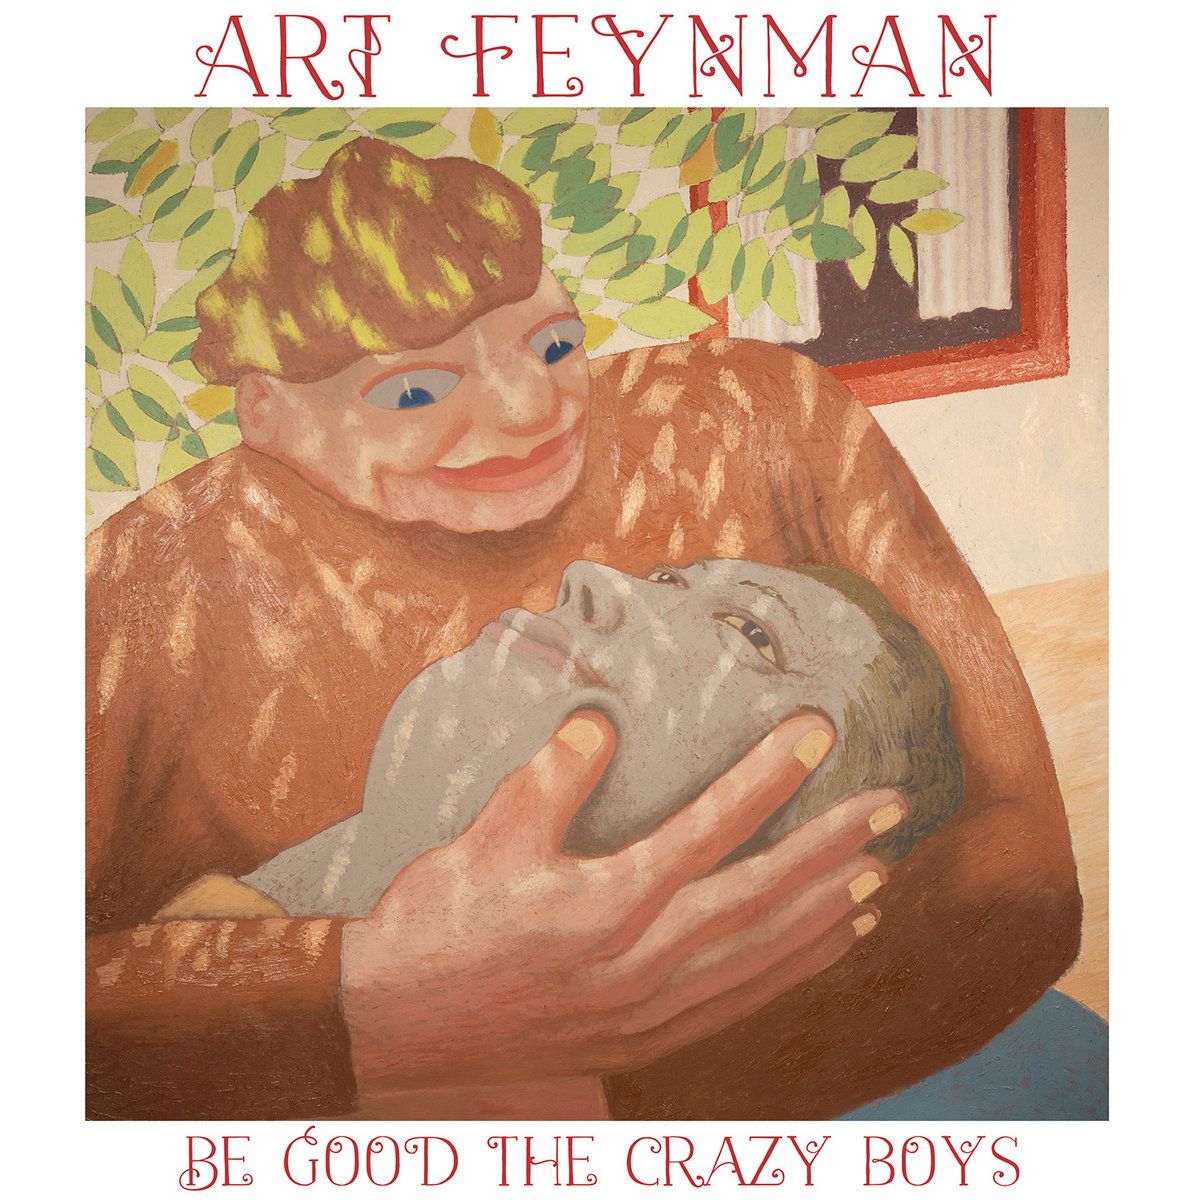 ART FEYNMAN / BE GOOD THE CRAZY BOYS (CD)